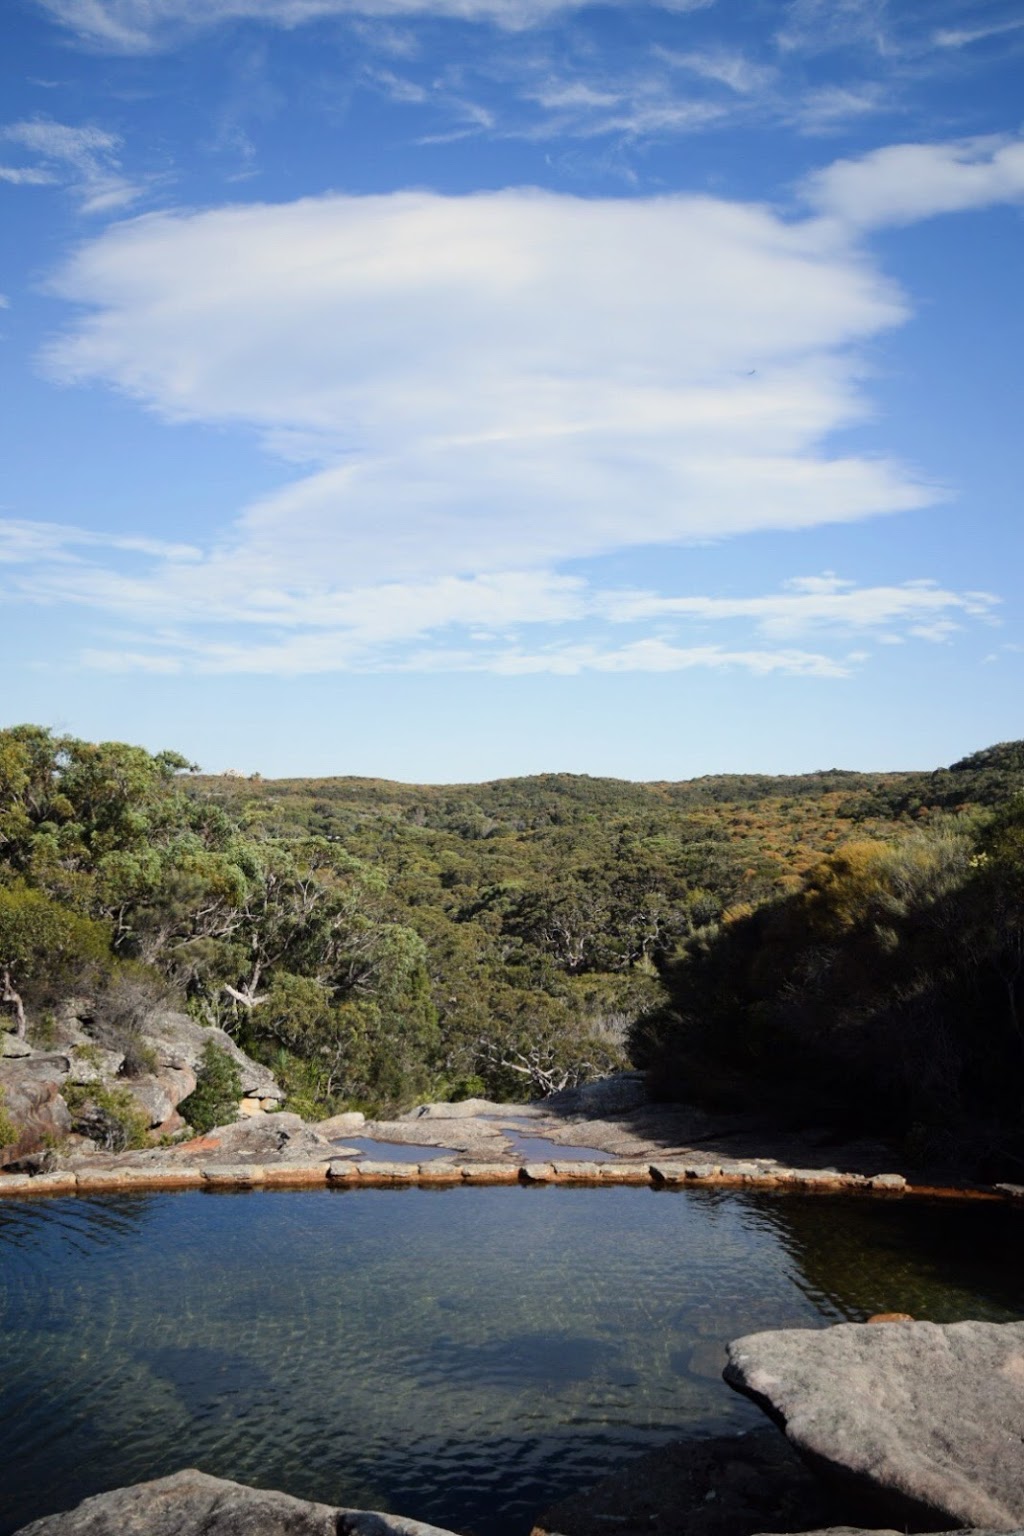 Wattamolla Dam | park | Royal National Park NSW 2233, Australia